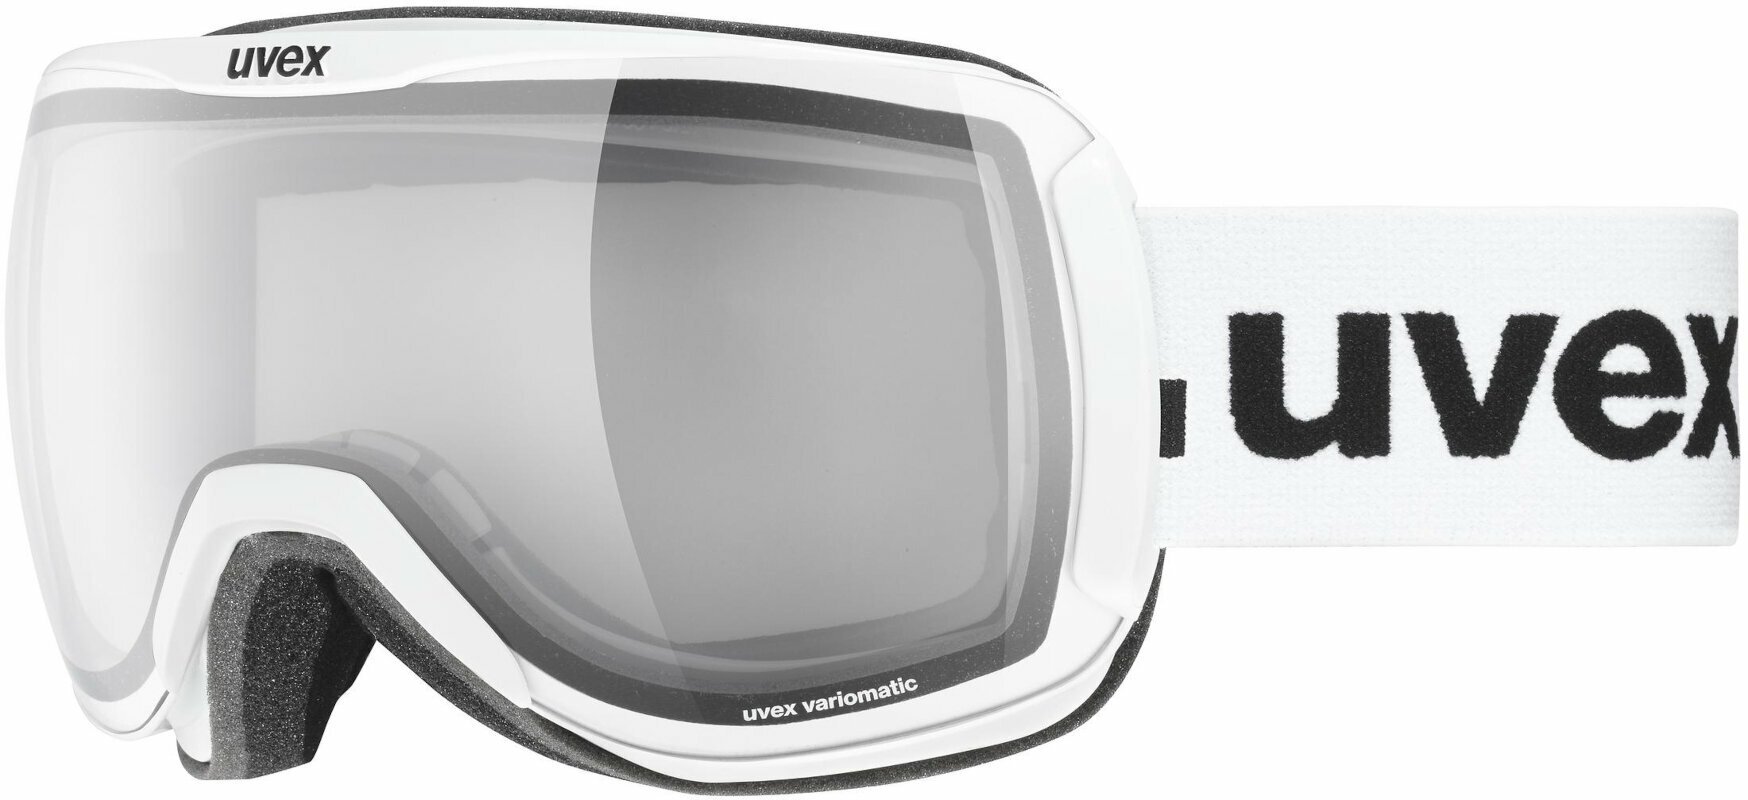 Ski-bril UVEX Downhill 2100 VPX White/Variomatic Polavision Ski-bril